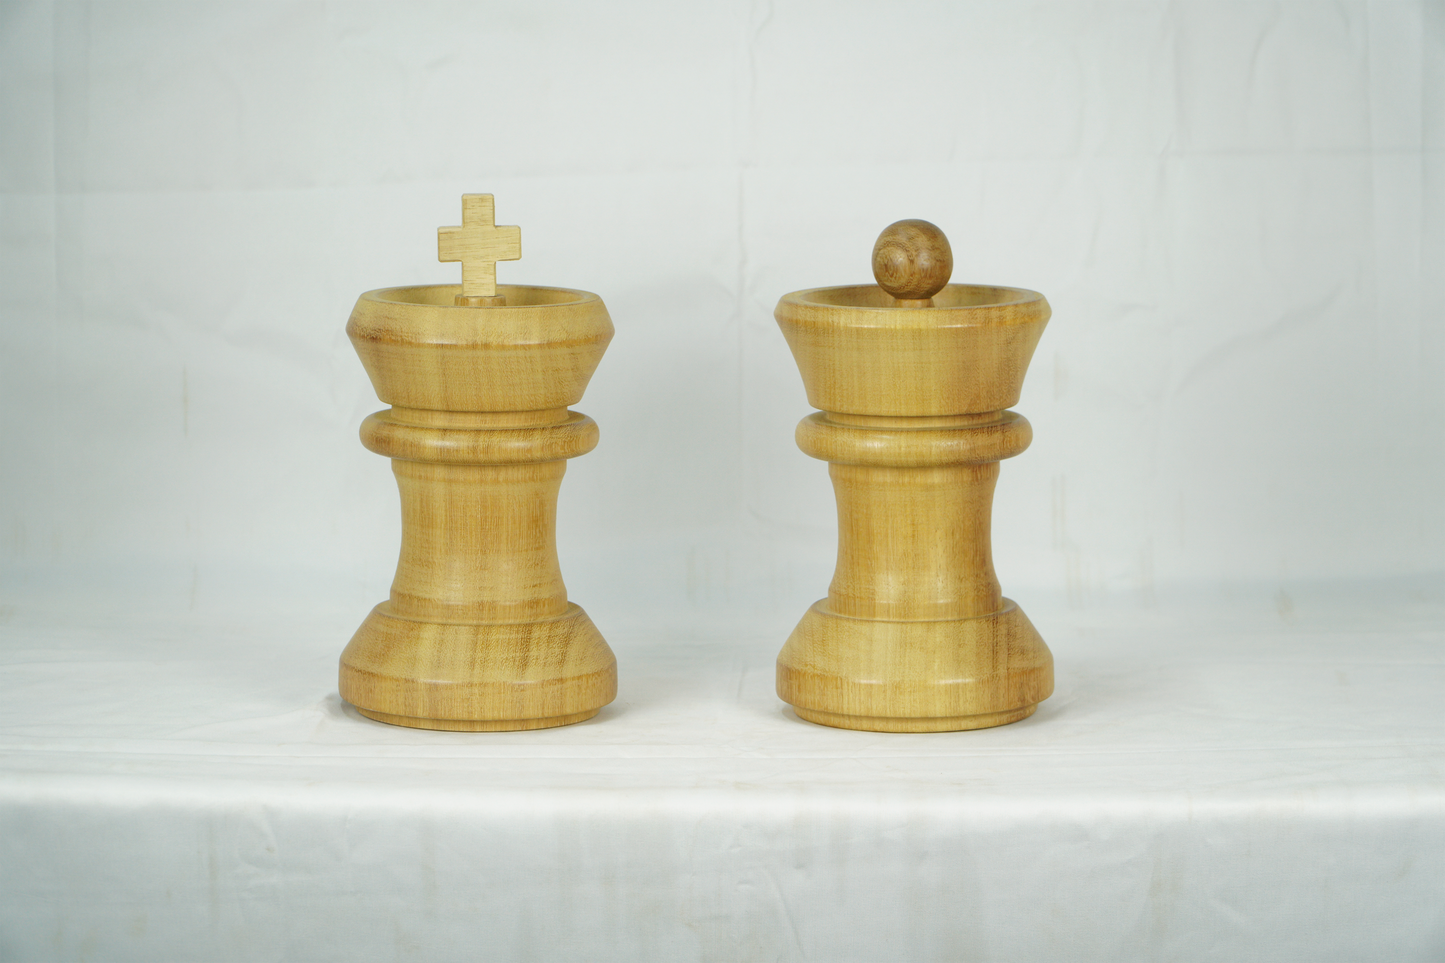 Wooden Decorative Chess Piece: Queen